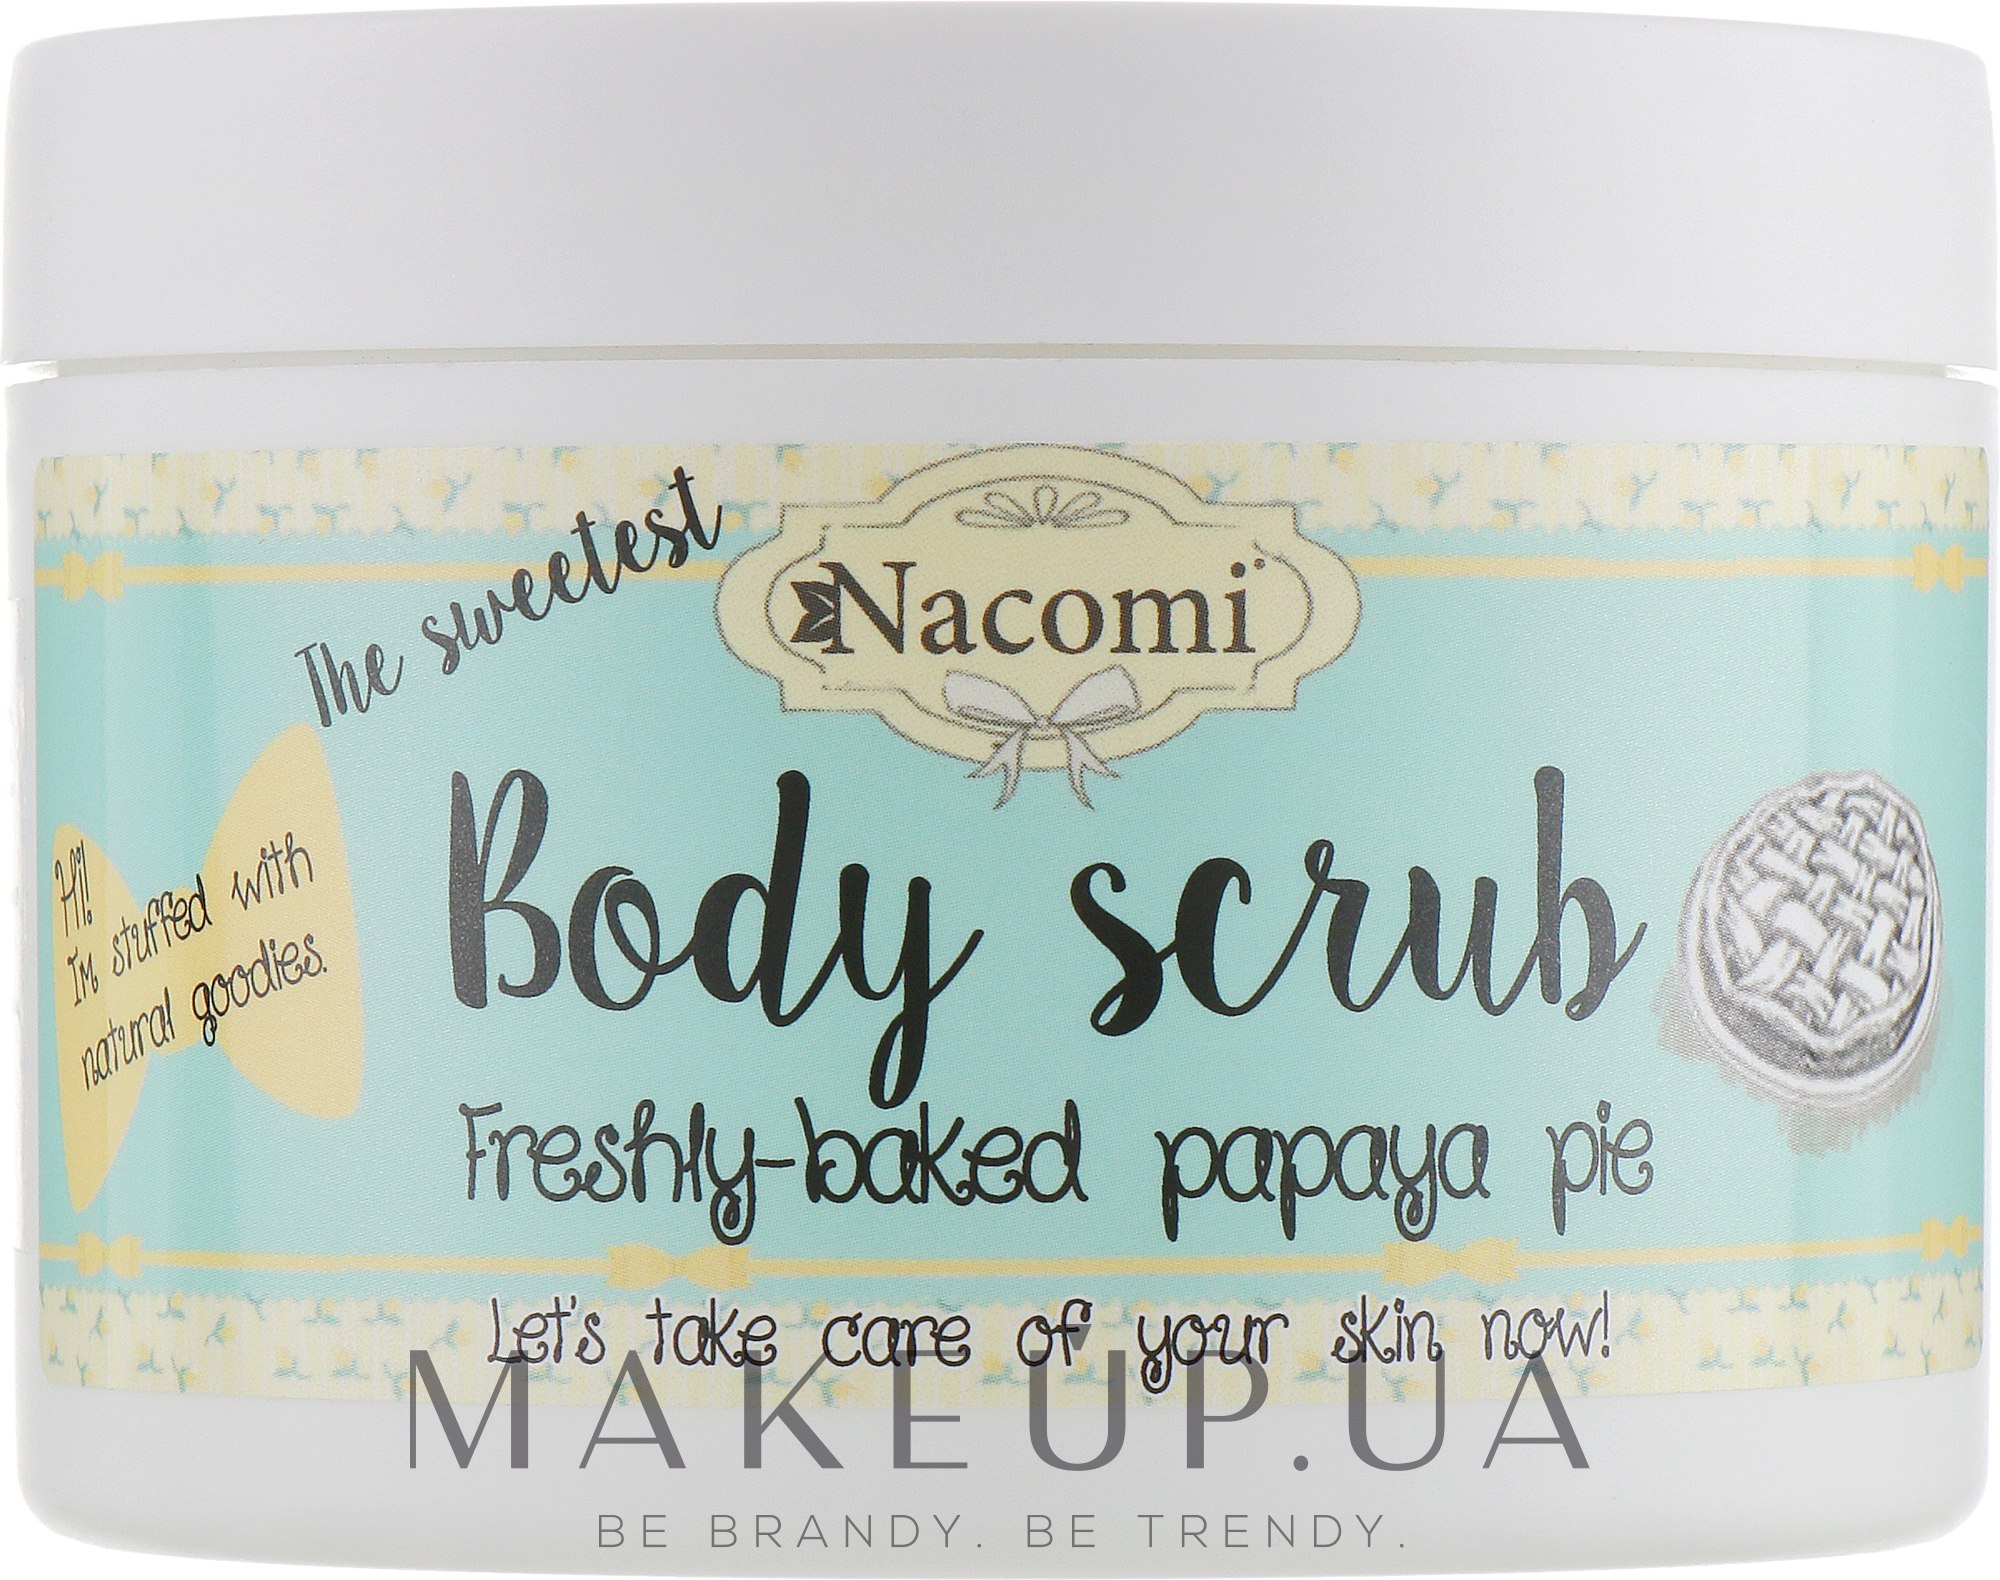 Пілінг-скраб для тіла "Запечений пиріг з папаї" - Nacomi Body Scrub Freshly Baked Papaya Pie — фото 200g